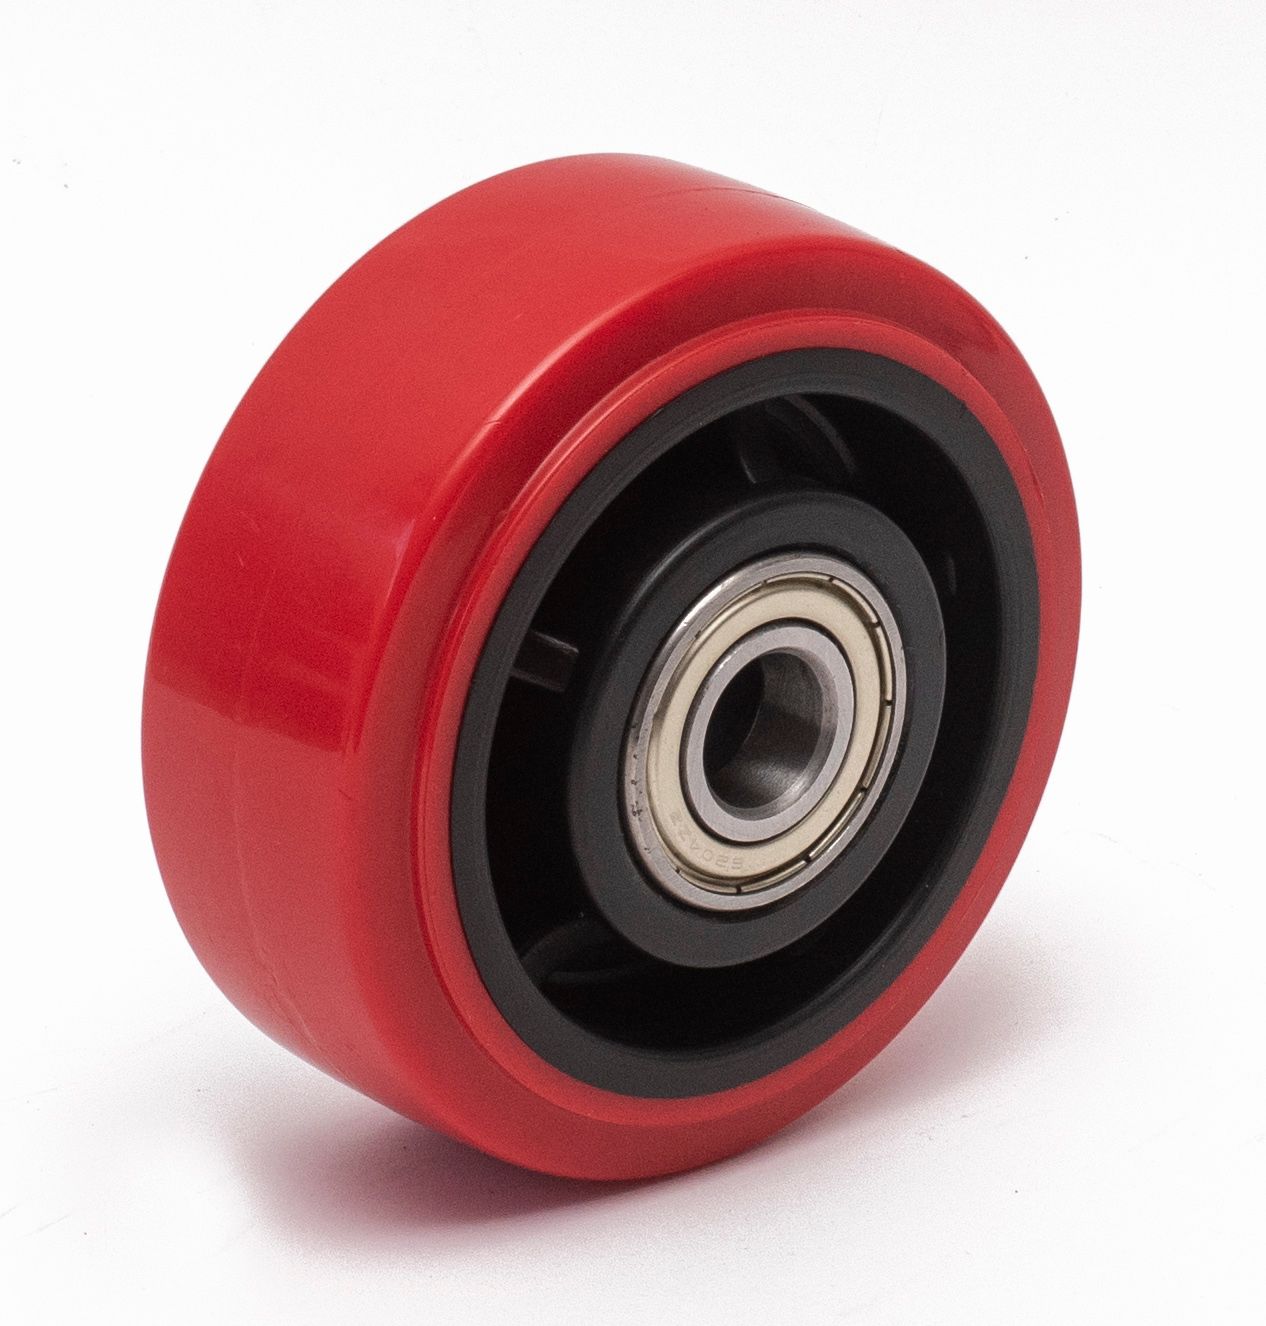 PUP - Polyurethane tyre on nylon core castor wheel